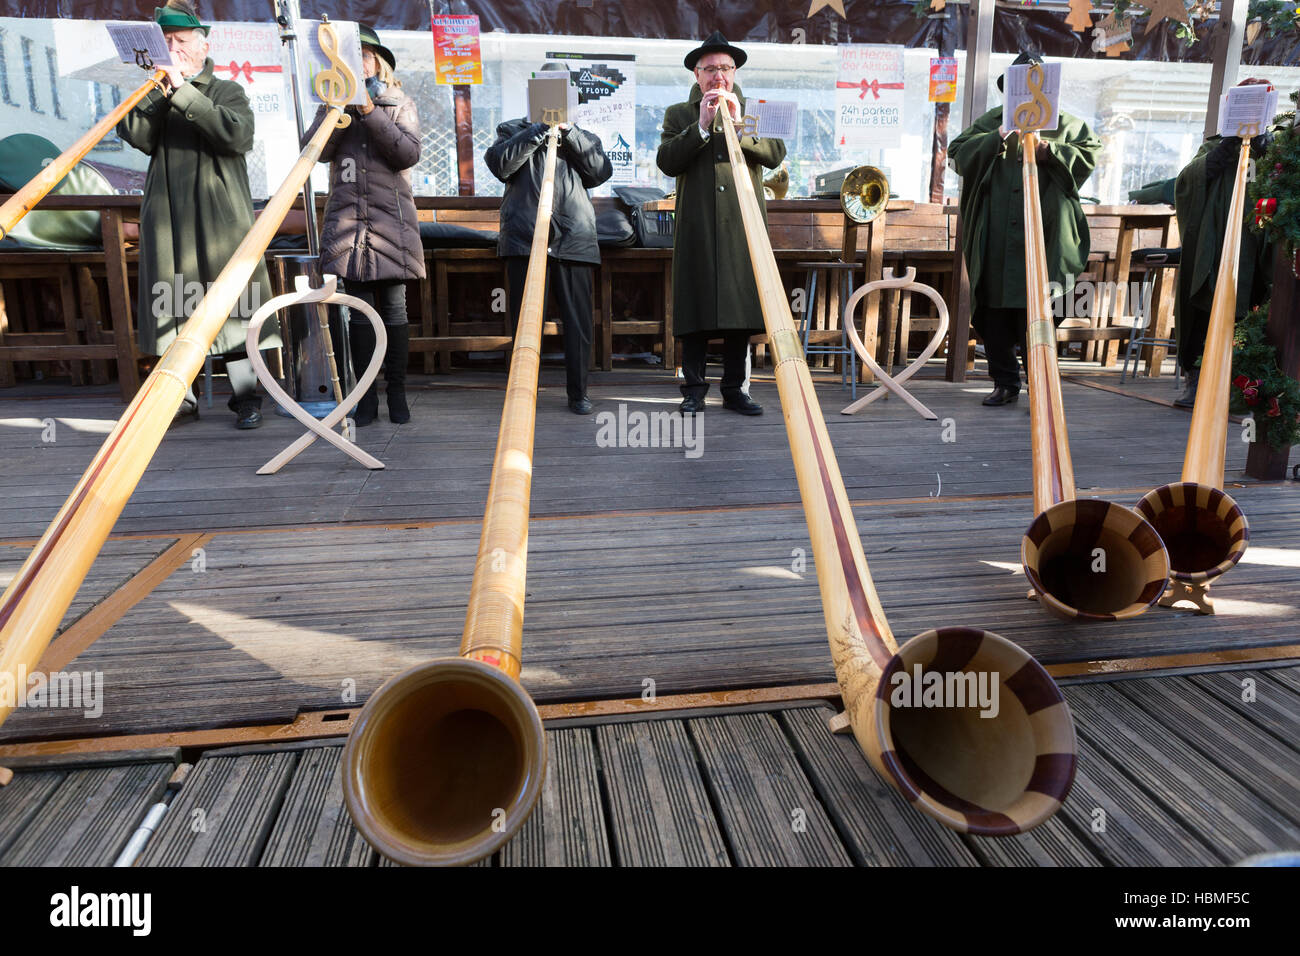 Musicians playing alphorns in Möchengladbach's Christmas market Stock Photo